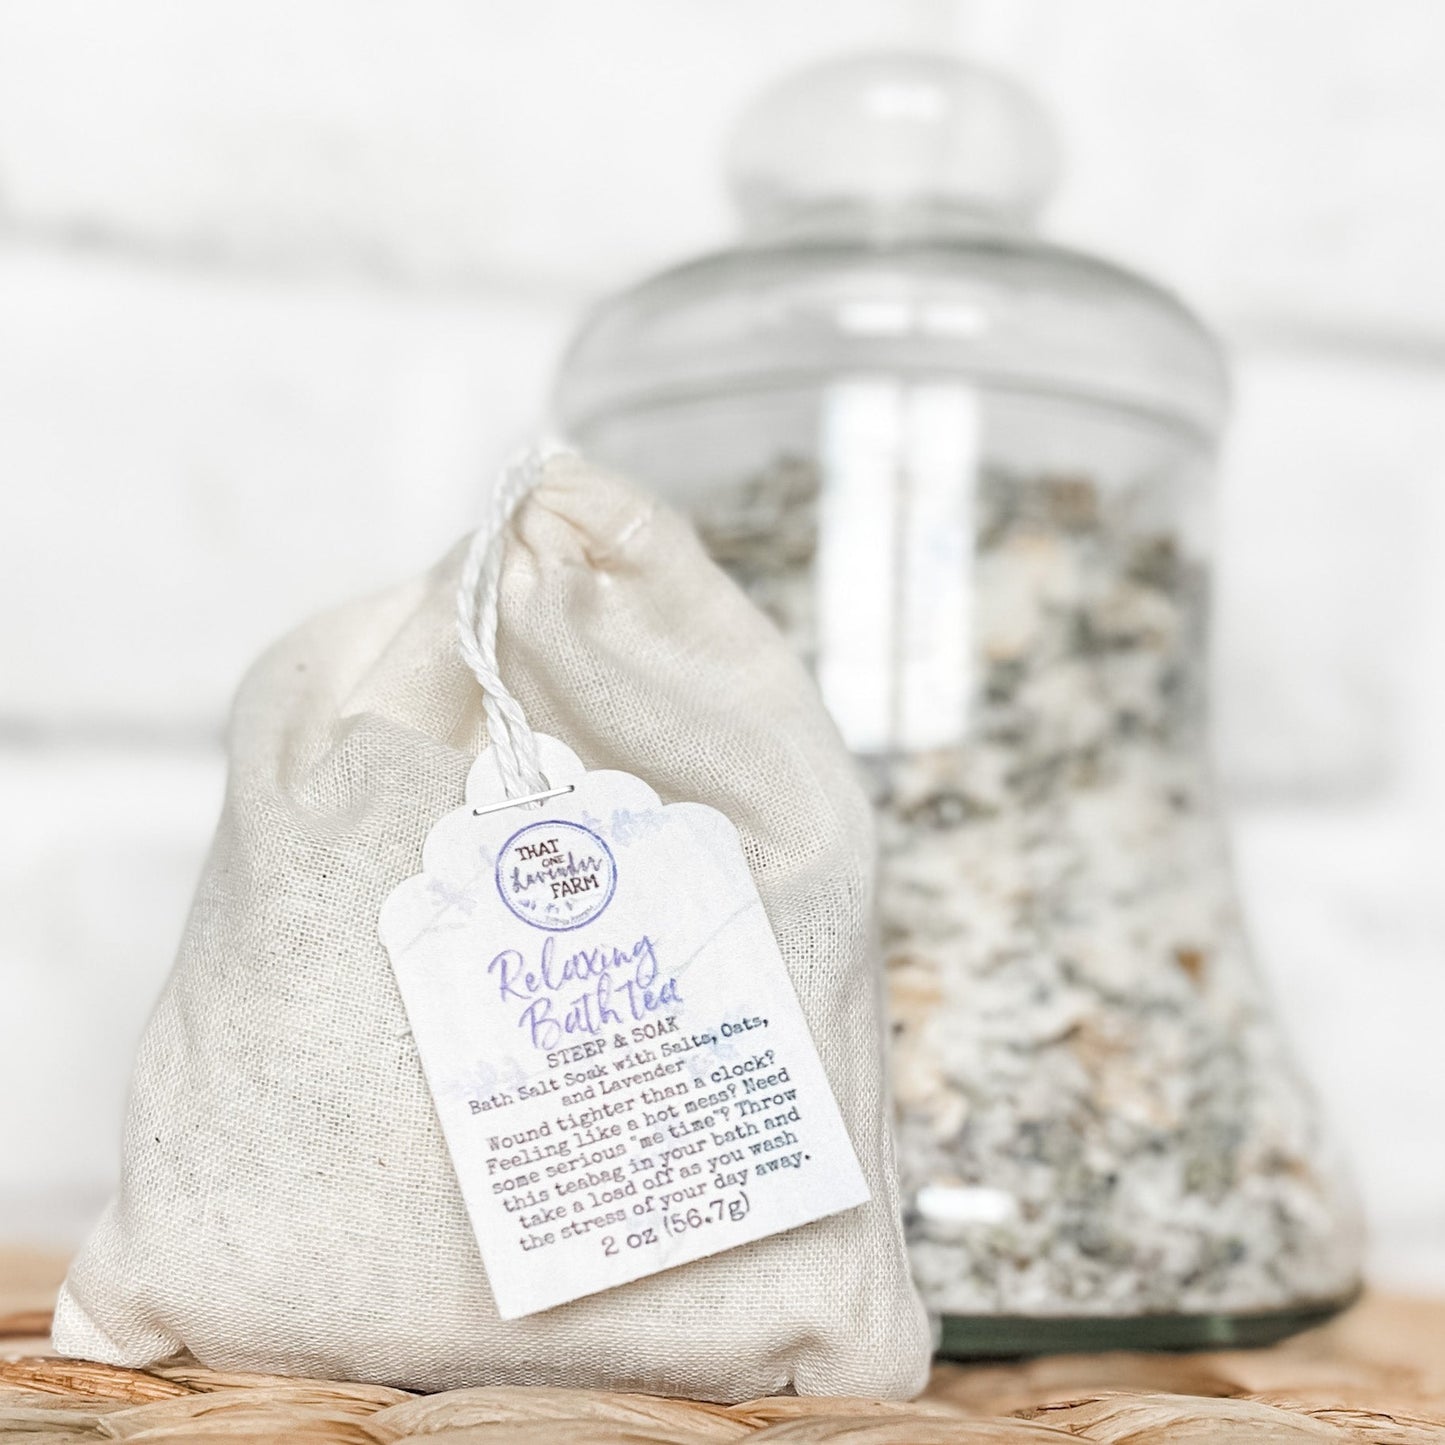 Relaxing Lavender Bath Tea – That One Lavender Farm